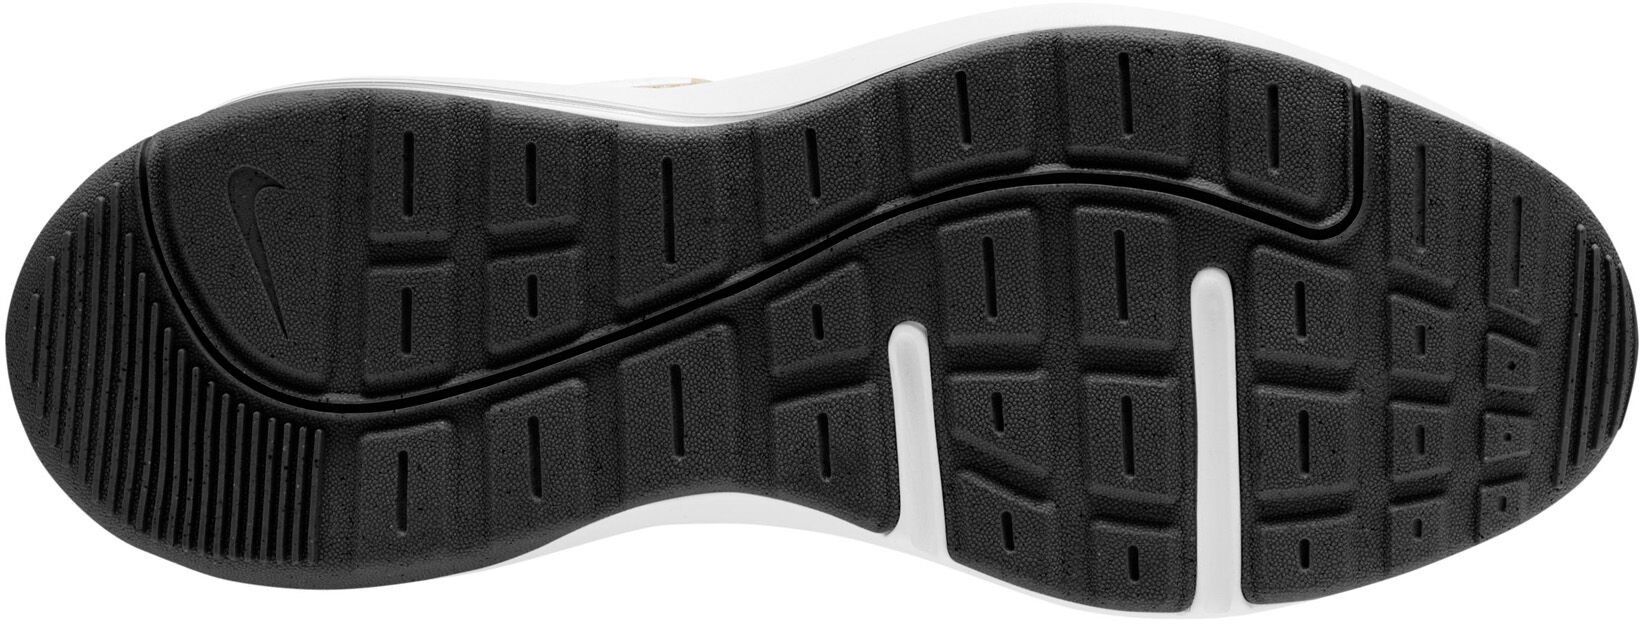 Obuv Nike Air Max AP W - biela/čierna